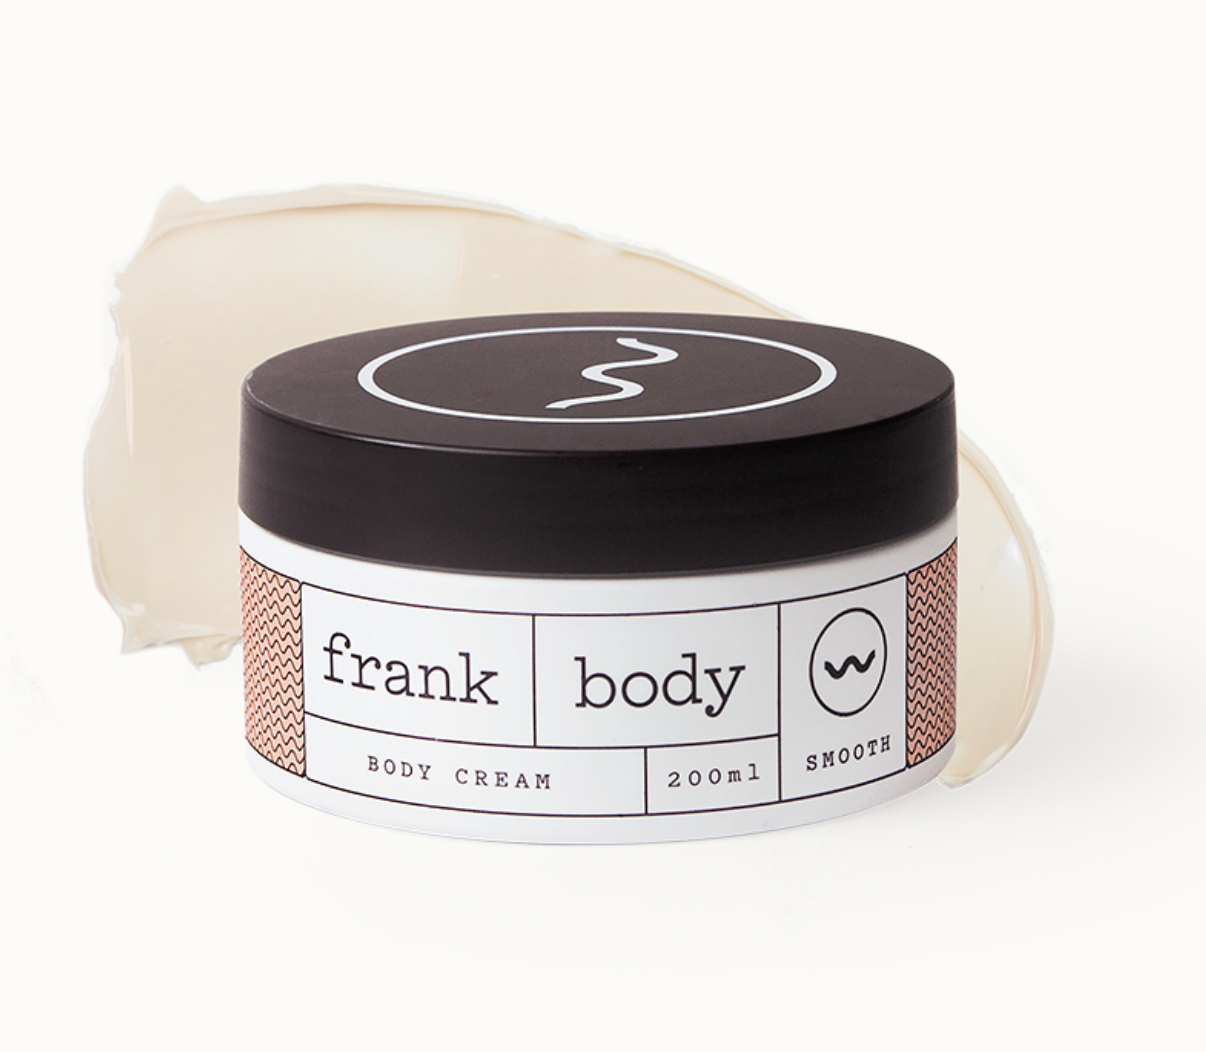   Body Cream  - Frank Body 